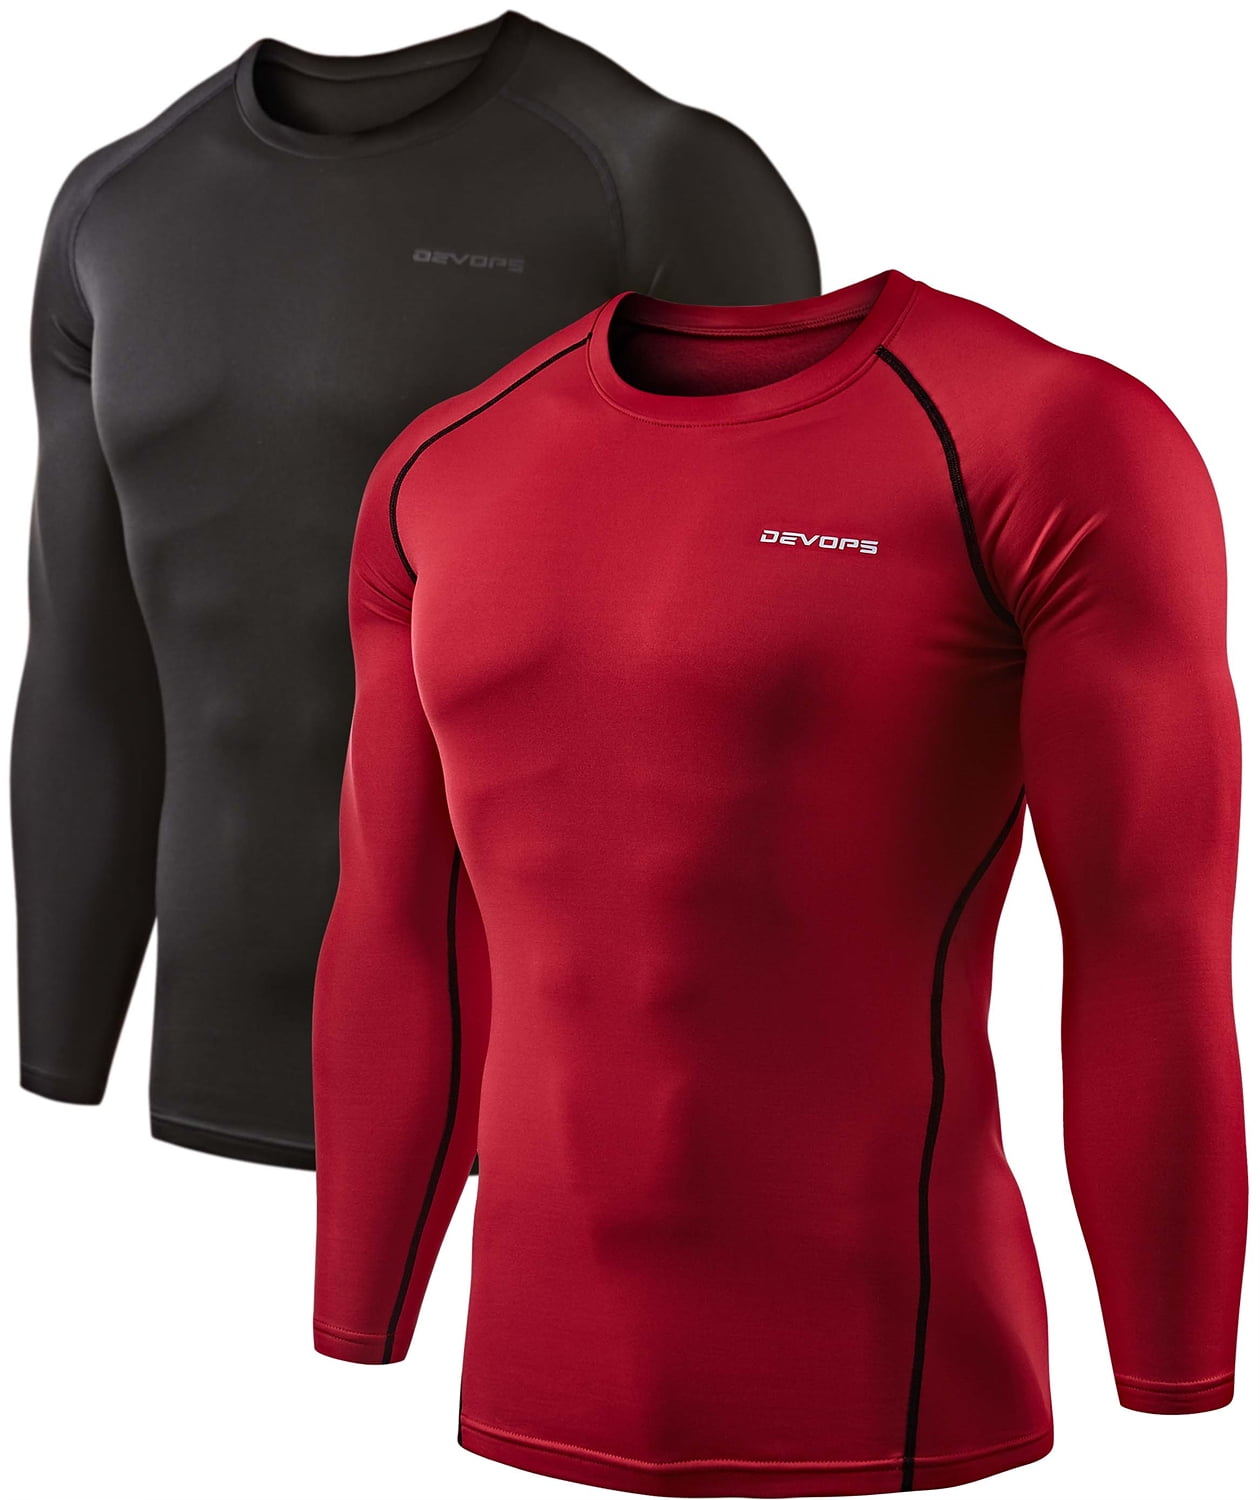 DEVOPS 2 pack Thermal shirts for Men Long sleeve Thermal compression ...